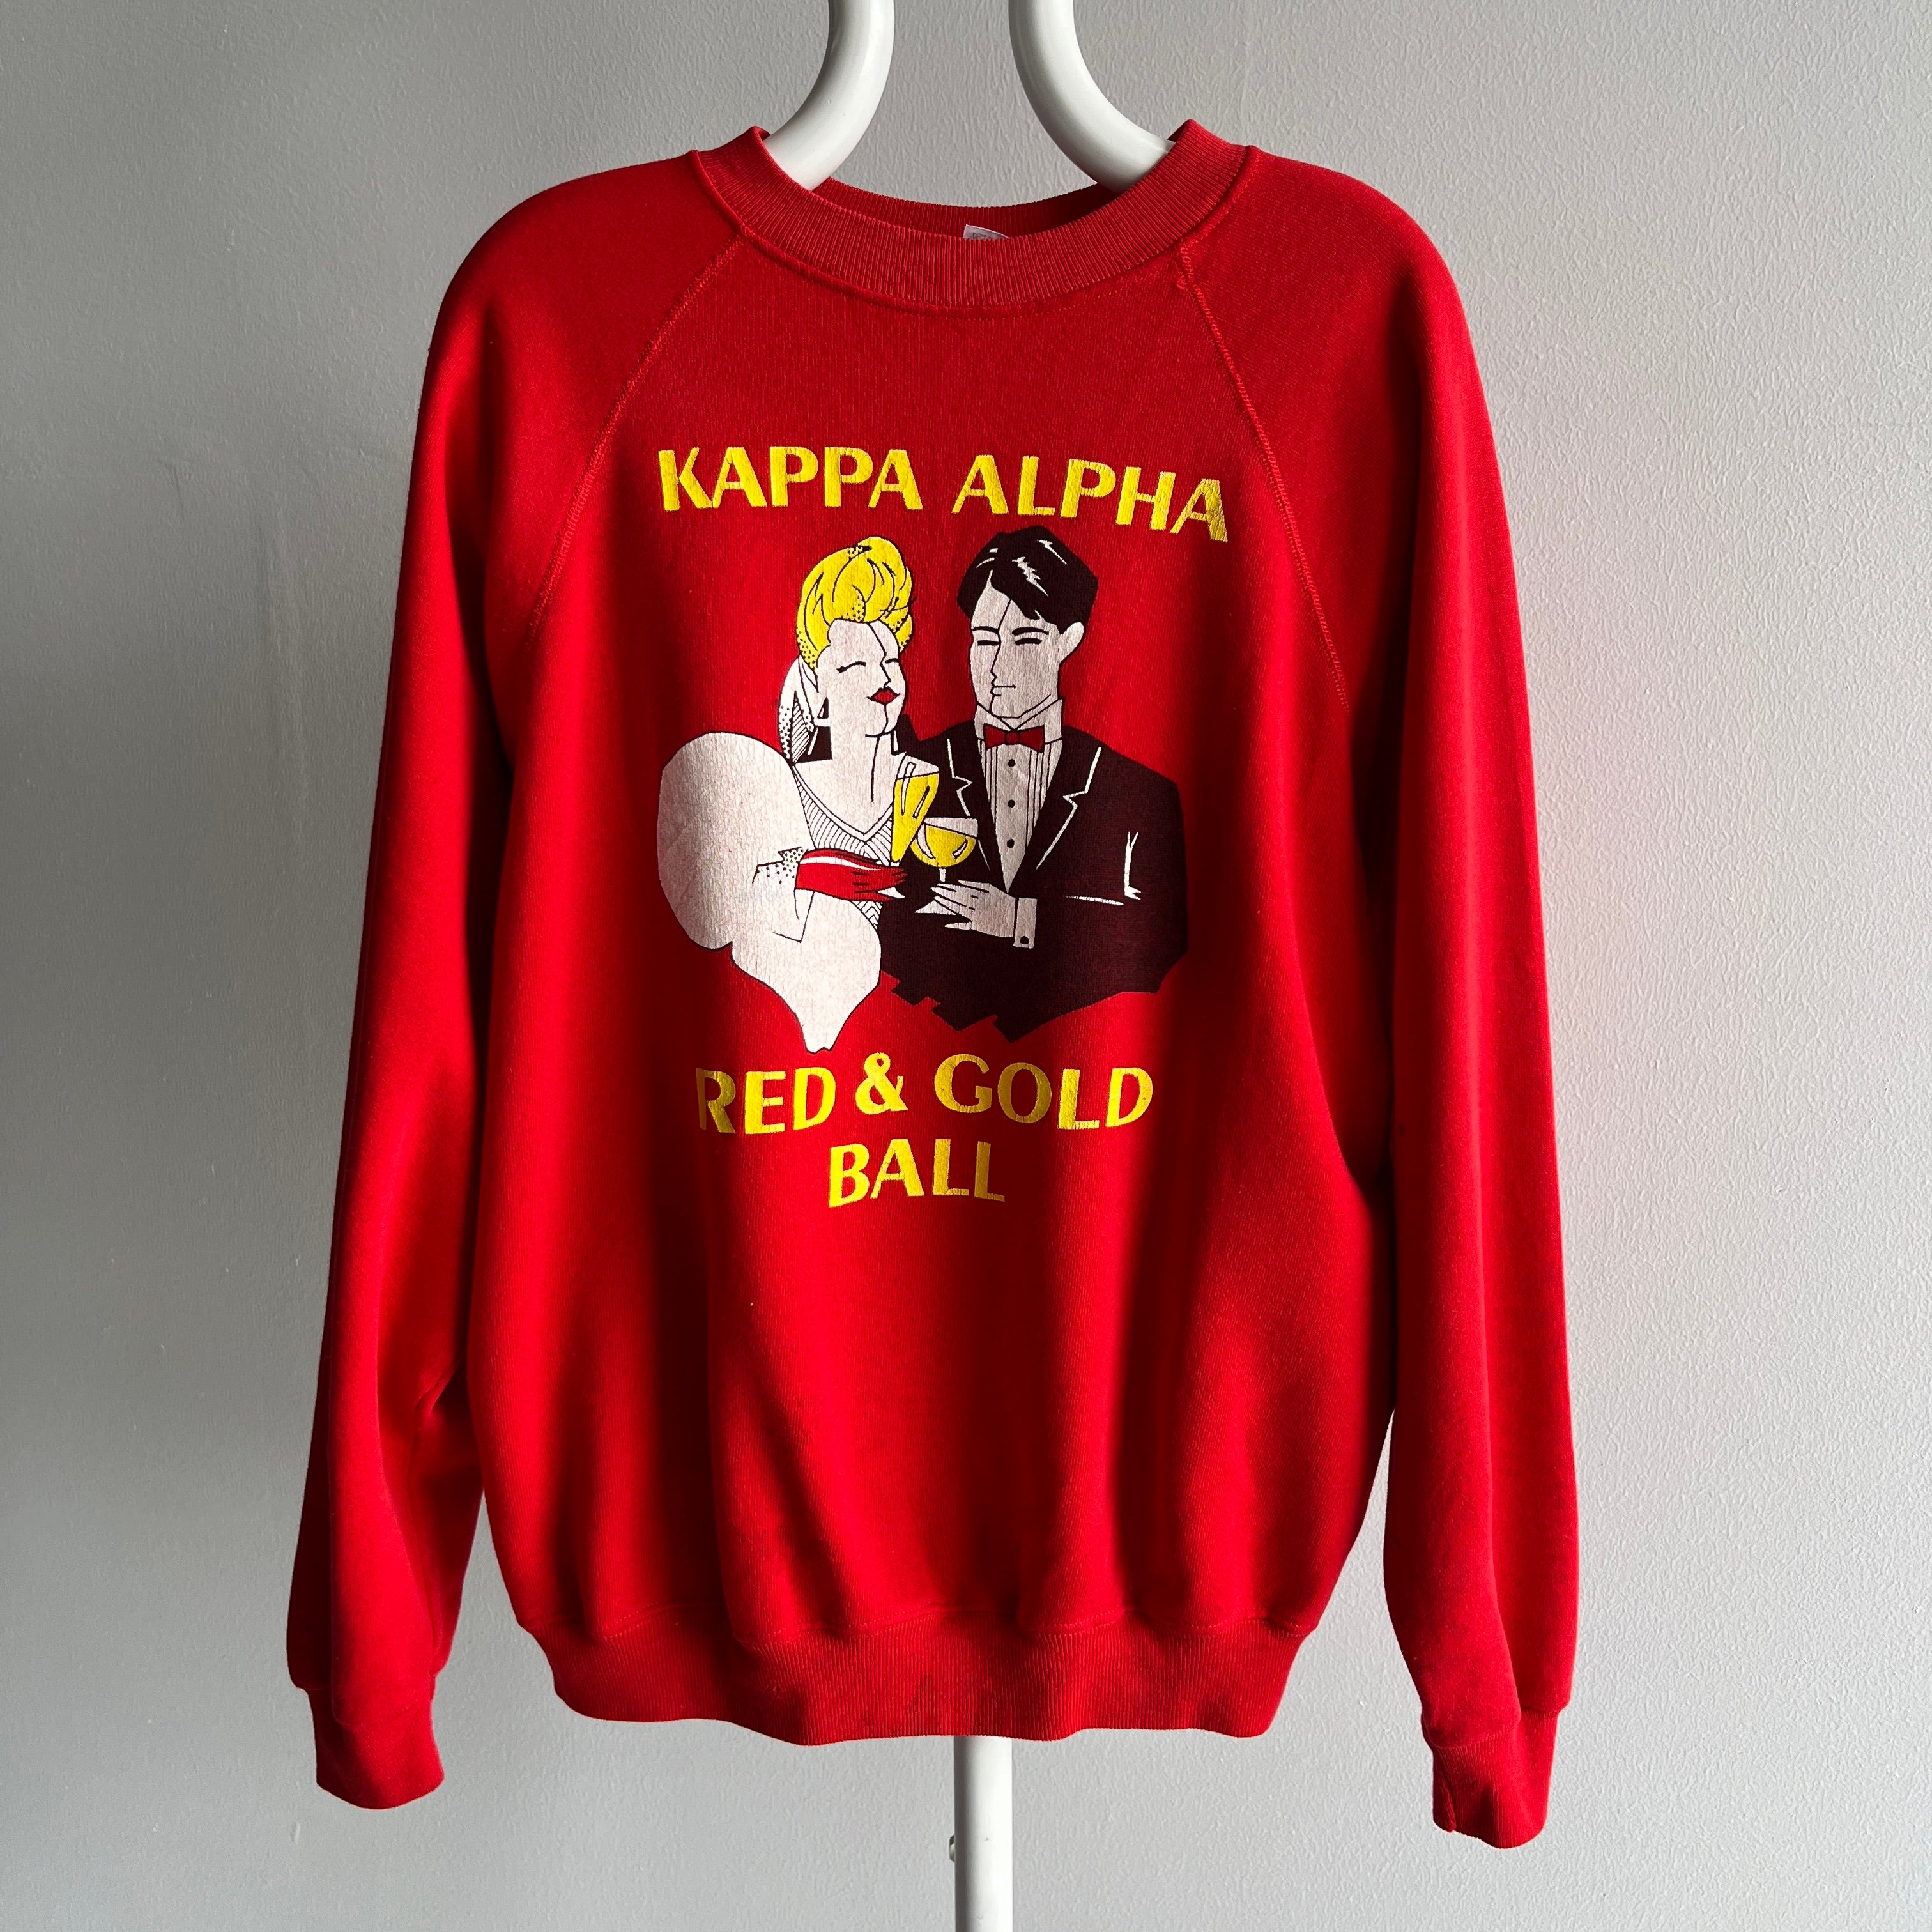 1980s Kappa Alpha Red & Gold Ball Sweatshirt - WOWZA